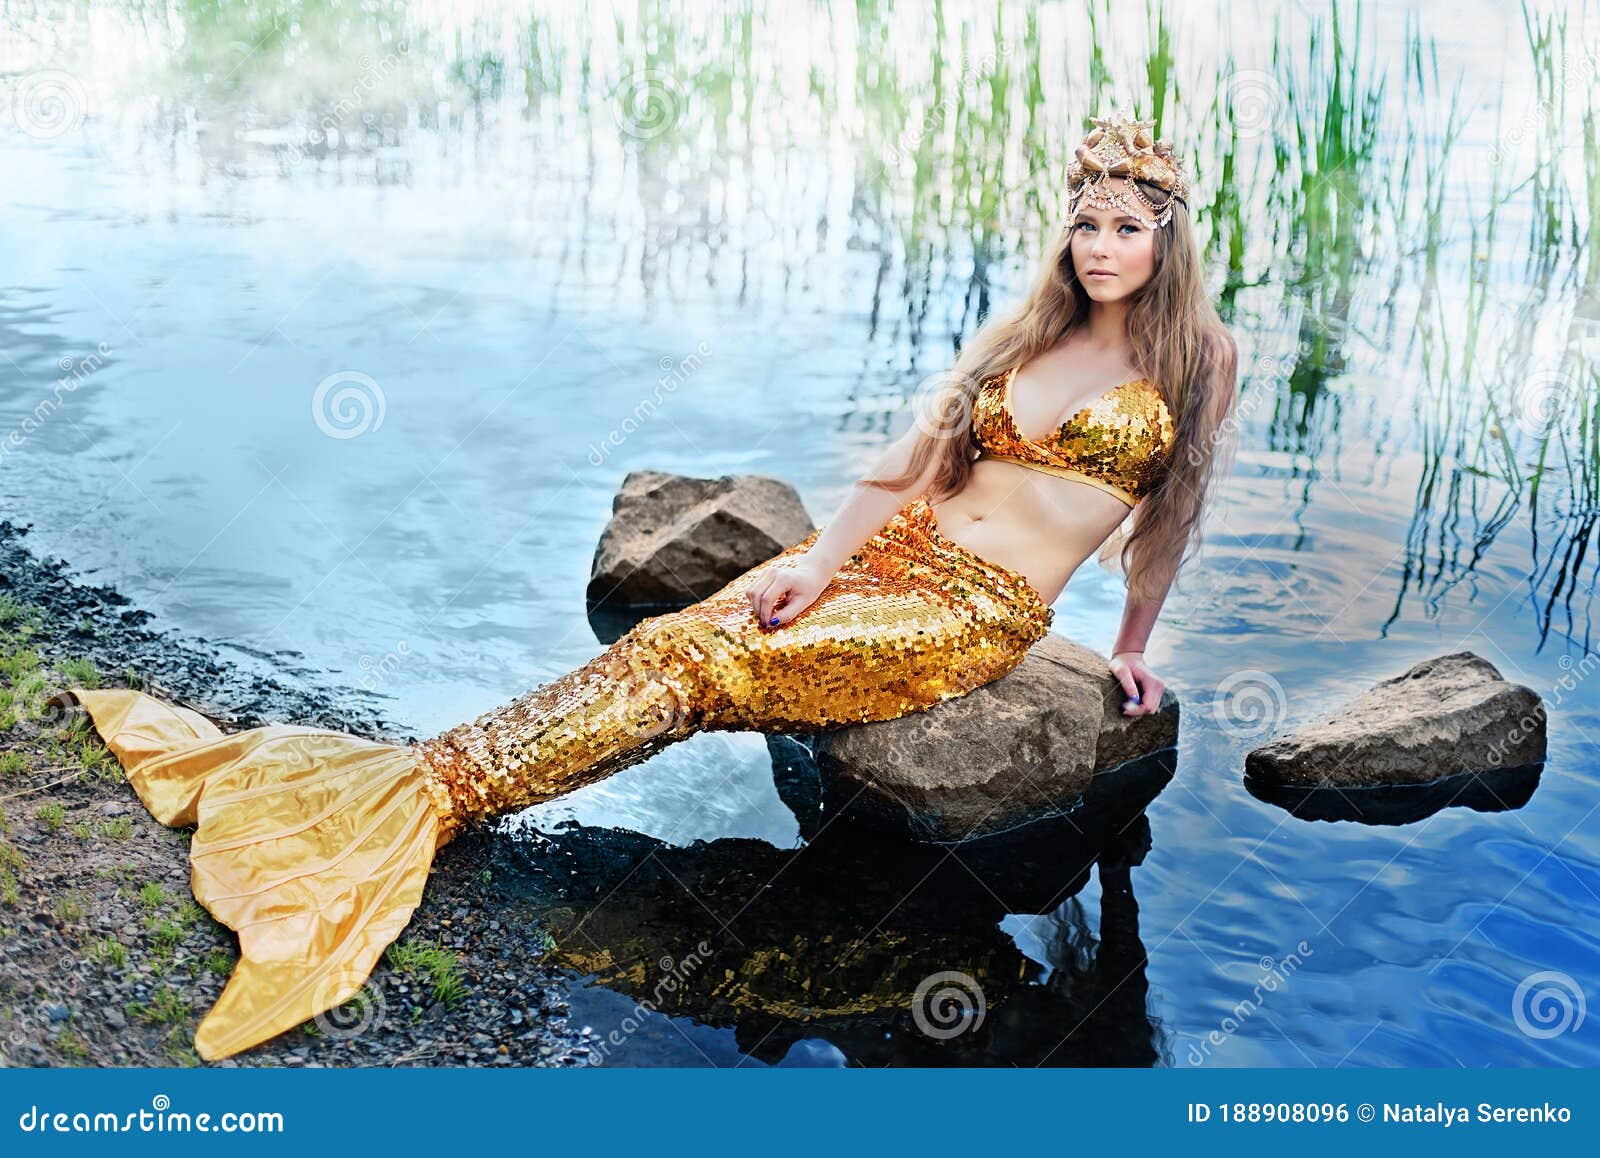 Fantasy Woman Real Mermaid Myth Goddess of Sea Stock Photo - Image ...